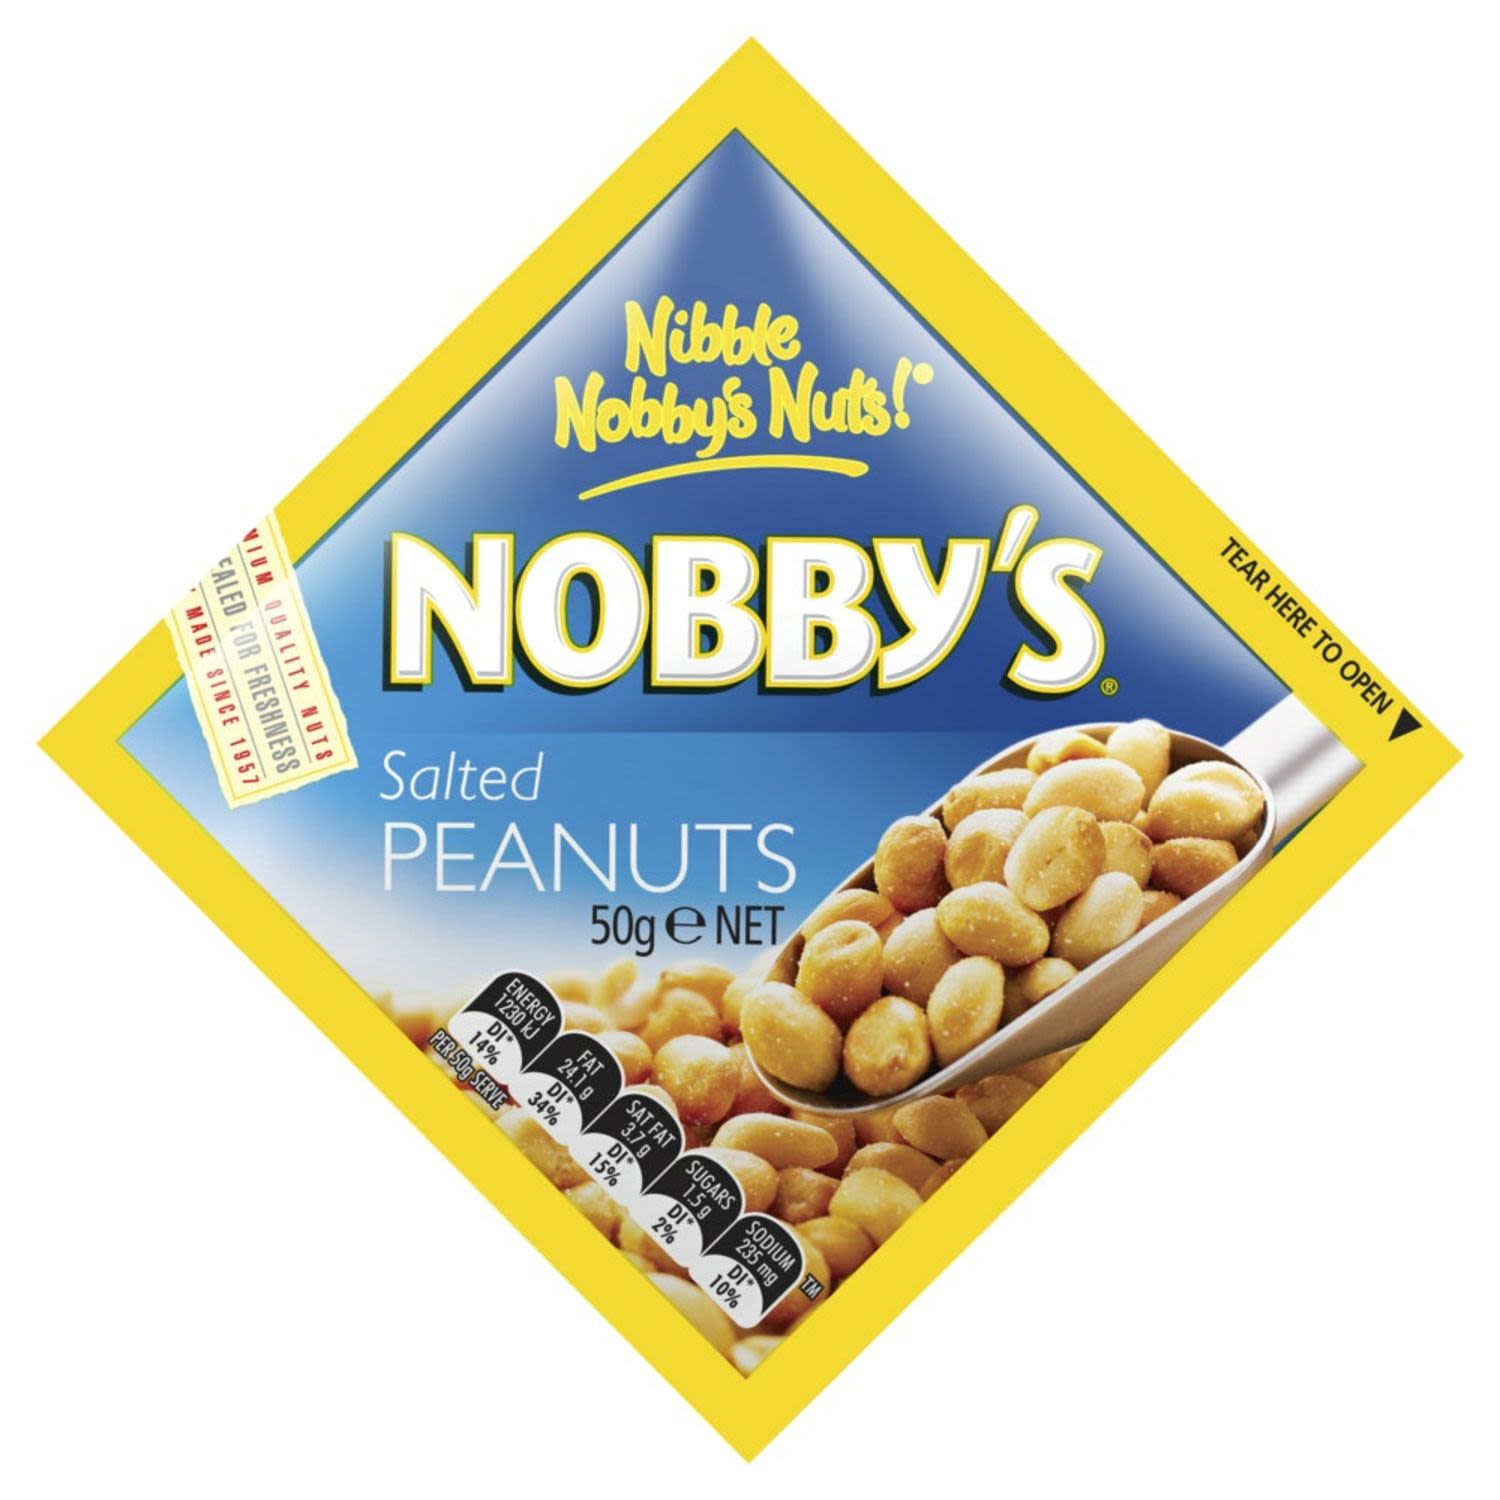 Nobby's Salted Peanuts 50g<br /> <br />Alcohol Volume: 0.0%<br /><br />Pack Format: Packet<br /><br />Standard Drinks: 0.0<br /><br />Pack Type: Packet<br />